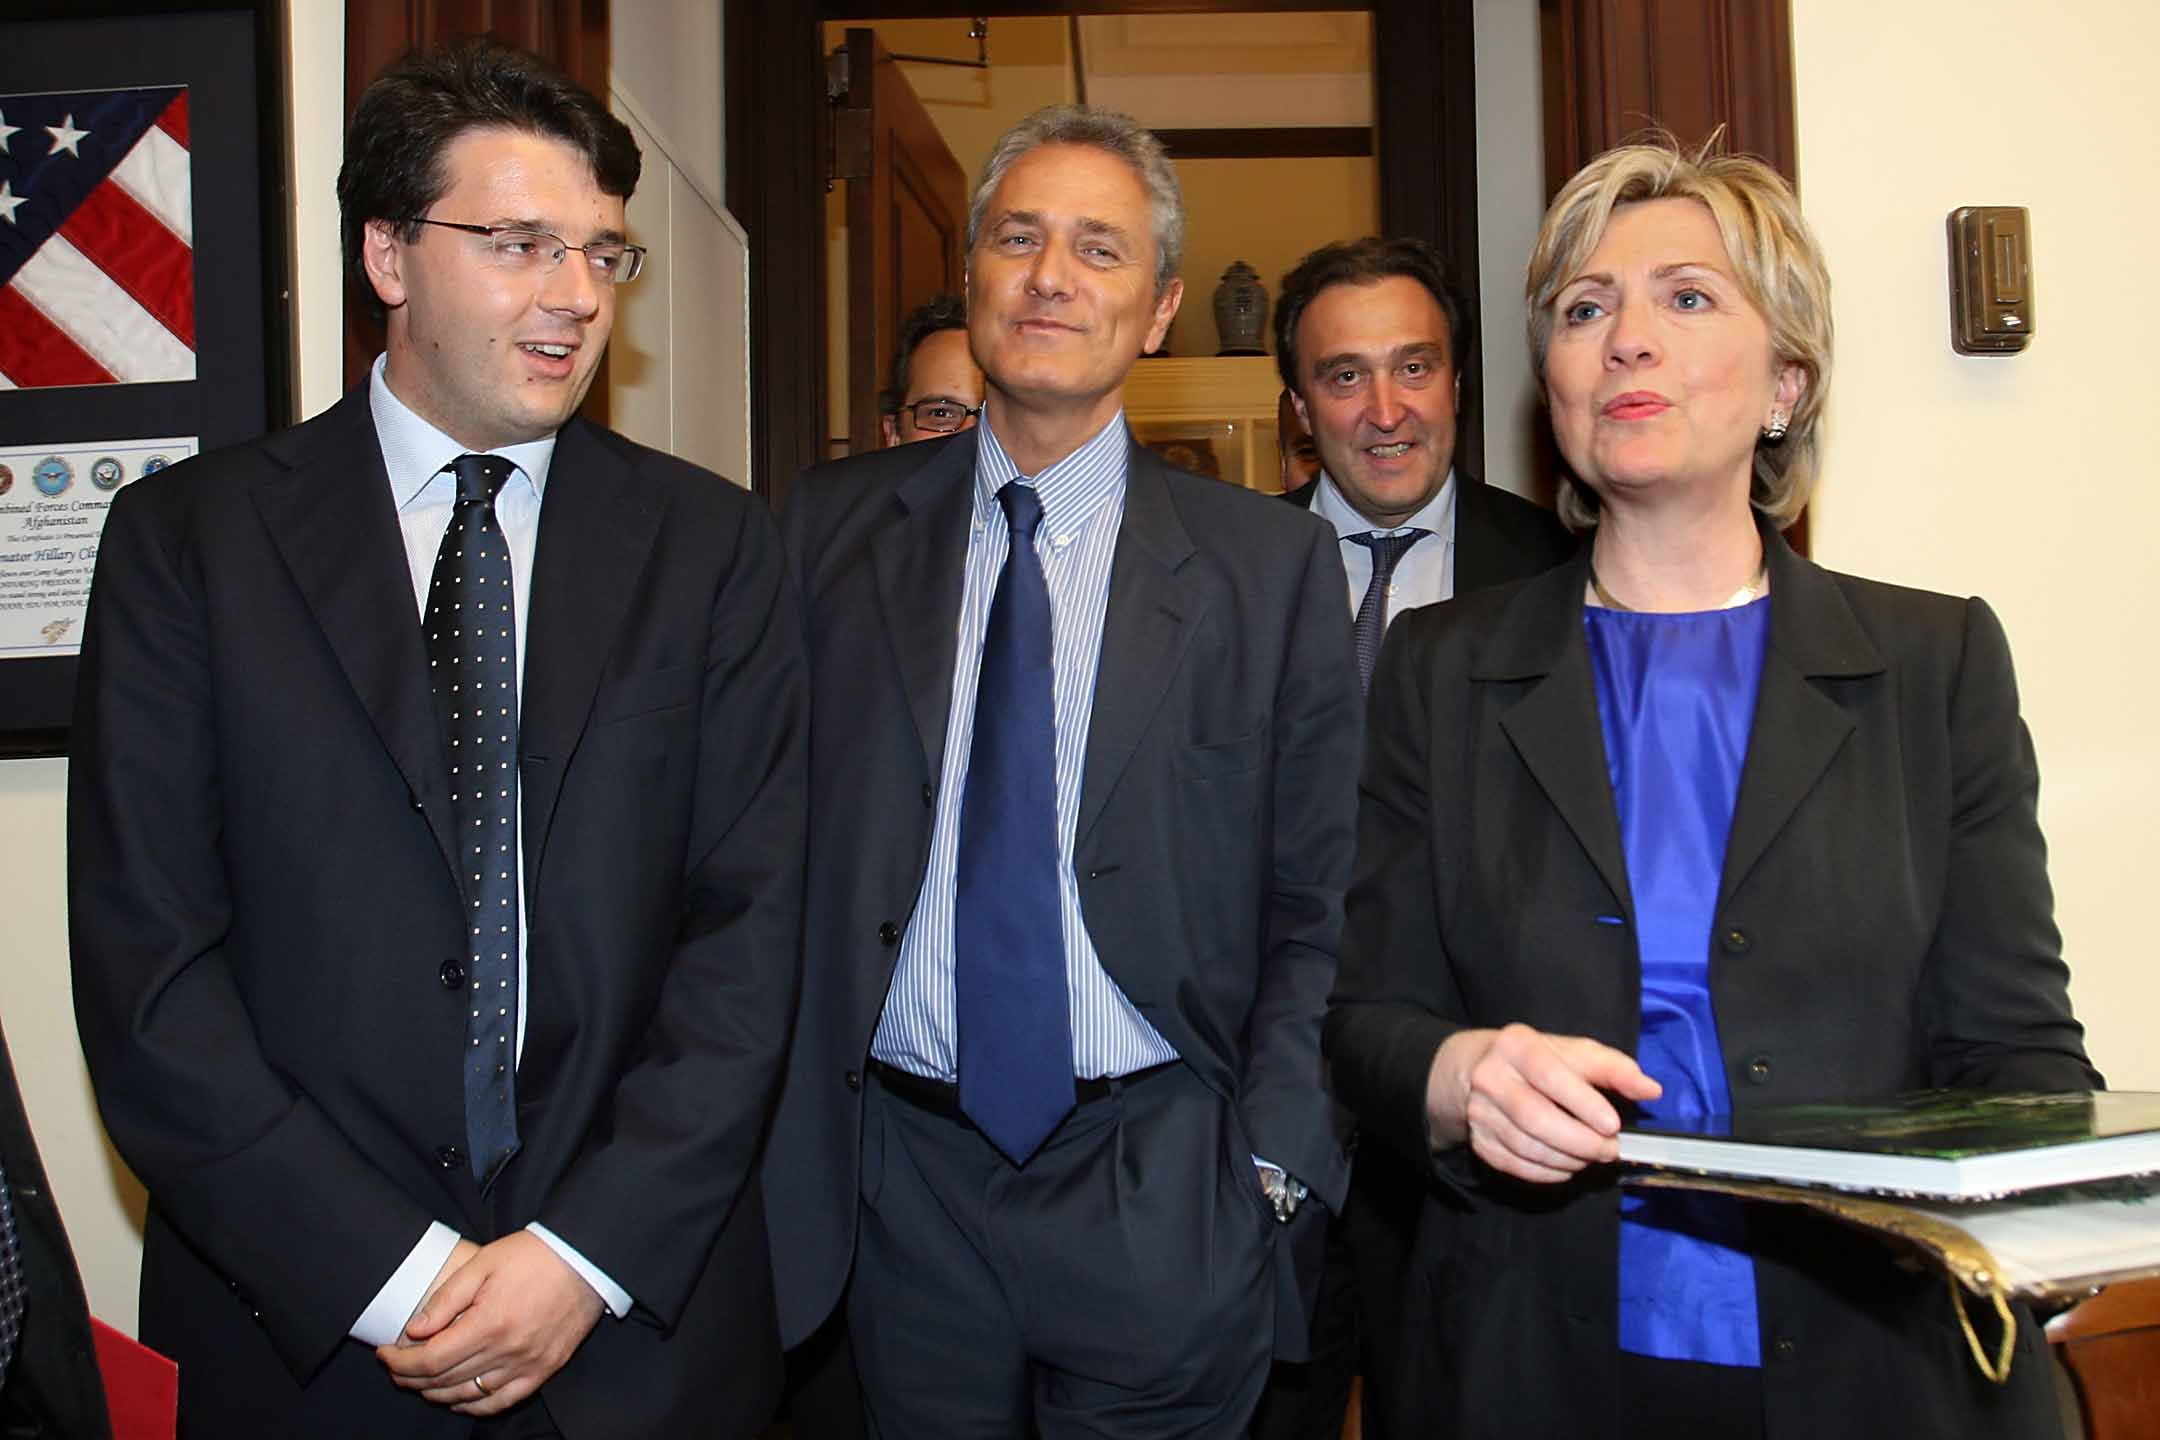 Da sinistra Matteo Renzi, Francesco Rutelli, Hillary Clinton